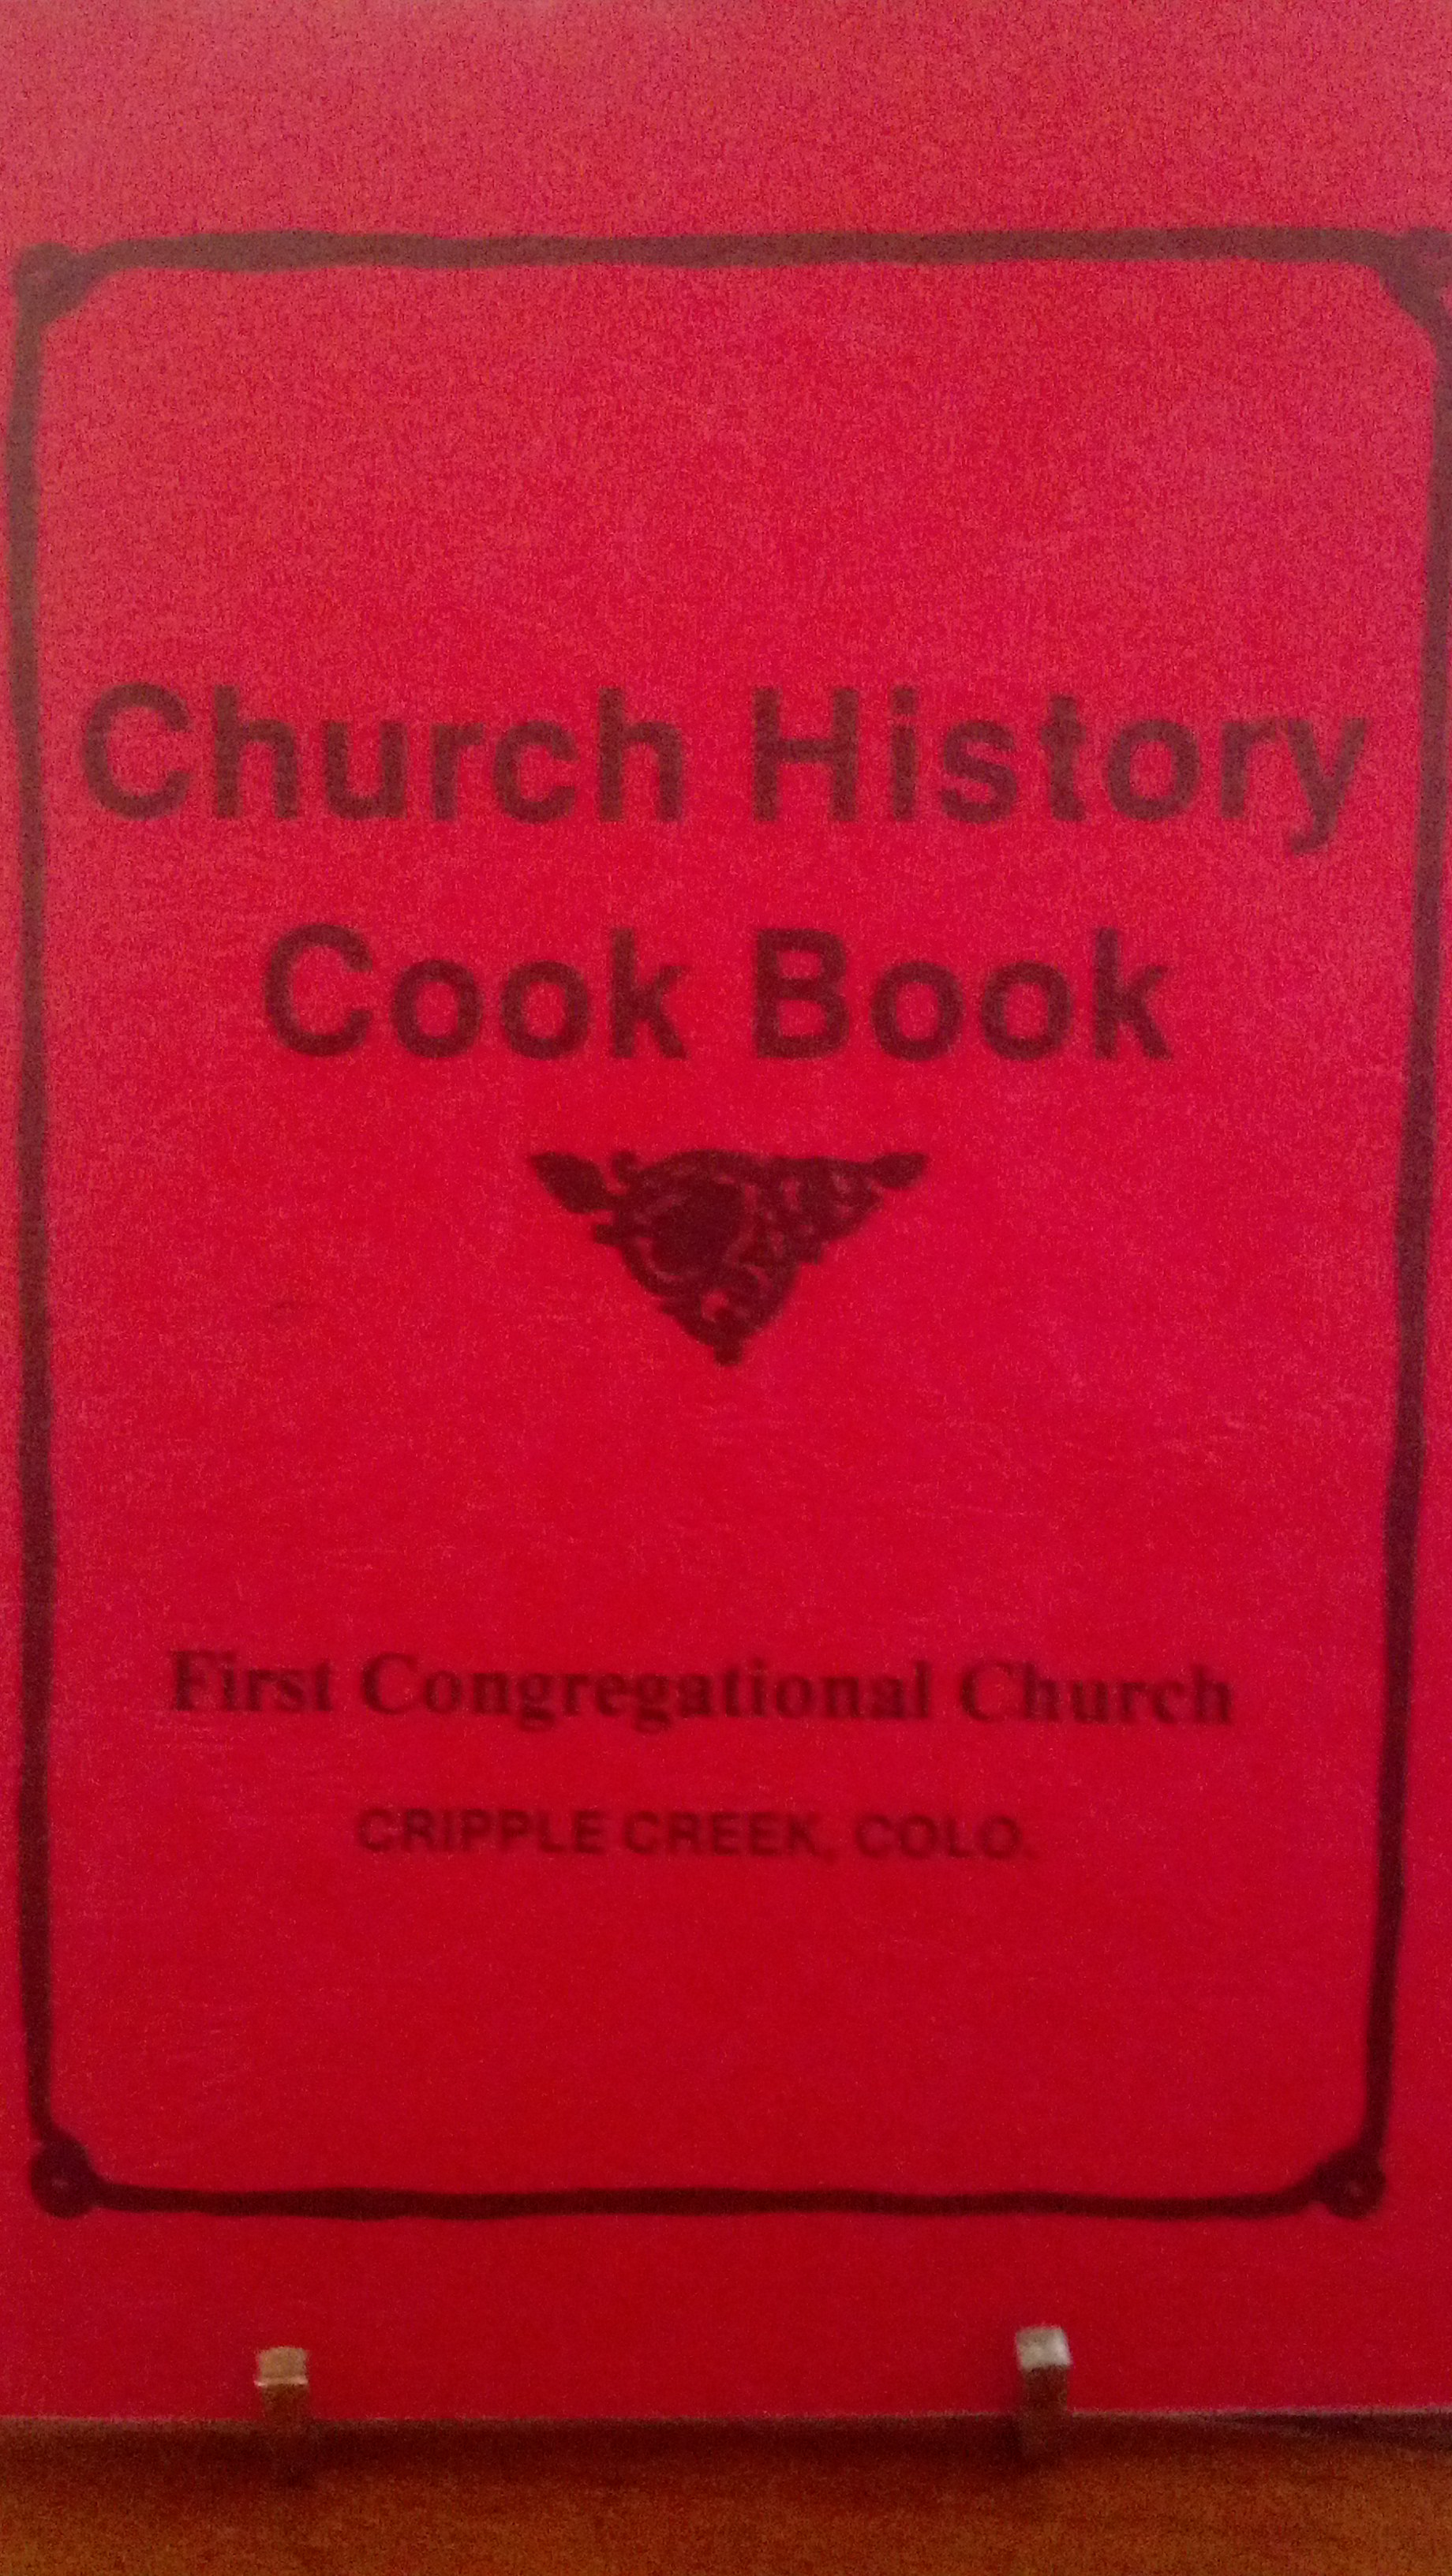 Cripple Creek Church History Cook Book